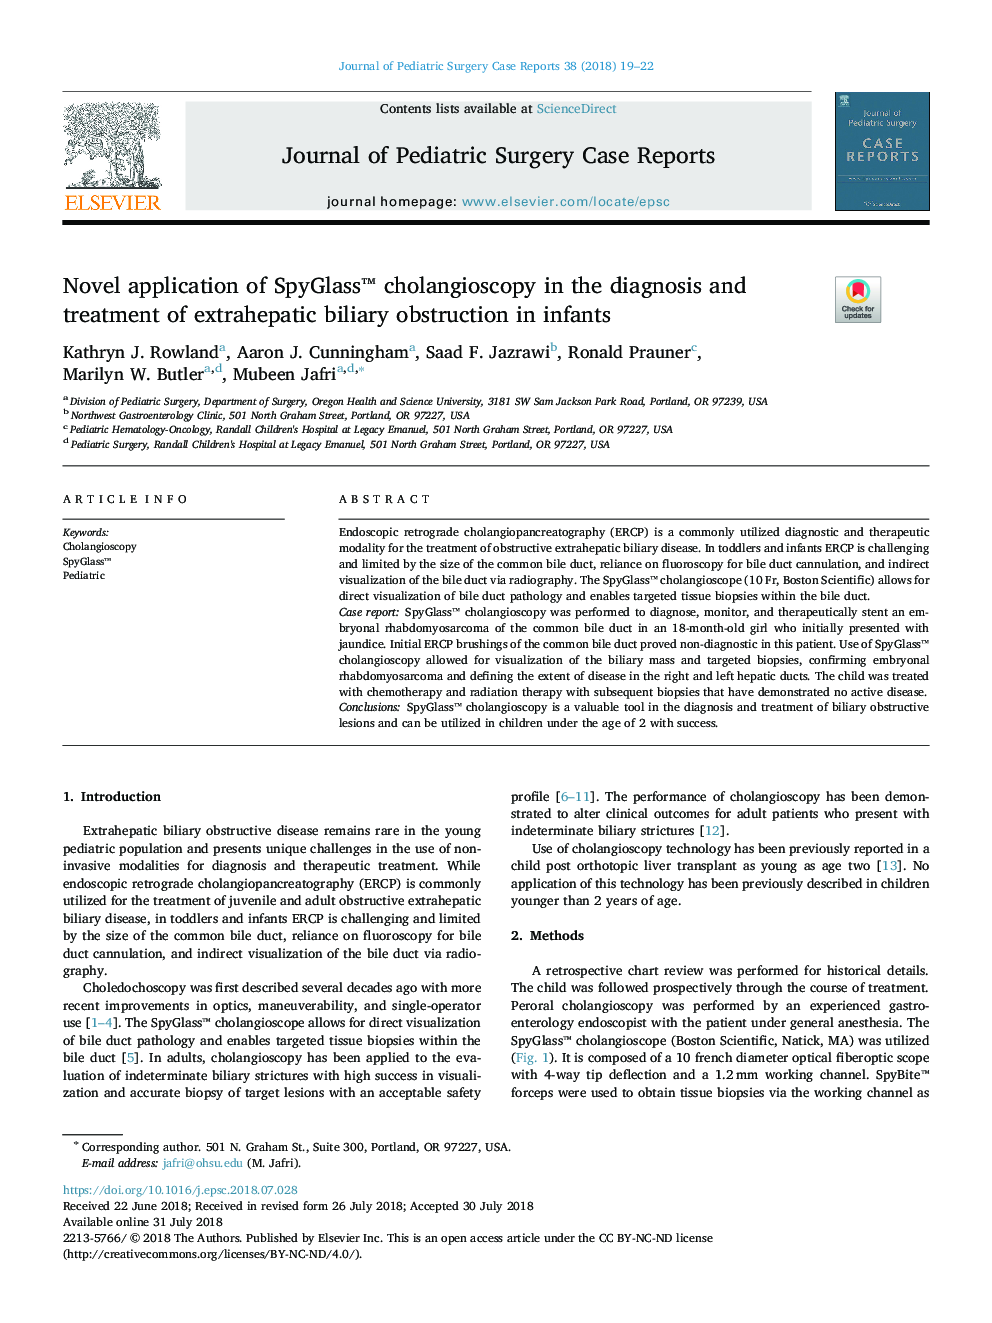 Novel application of SpyGlassâ¢ cholangioscopy in the diagnosis and treatment of extrahepatic biliary obstruction in infants